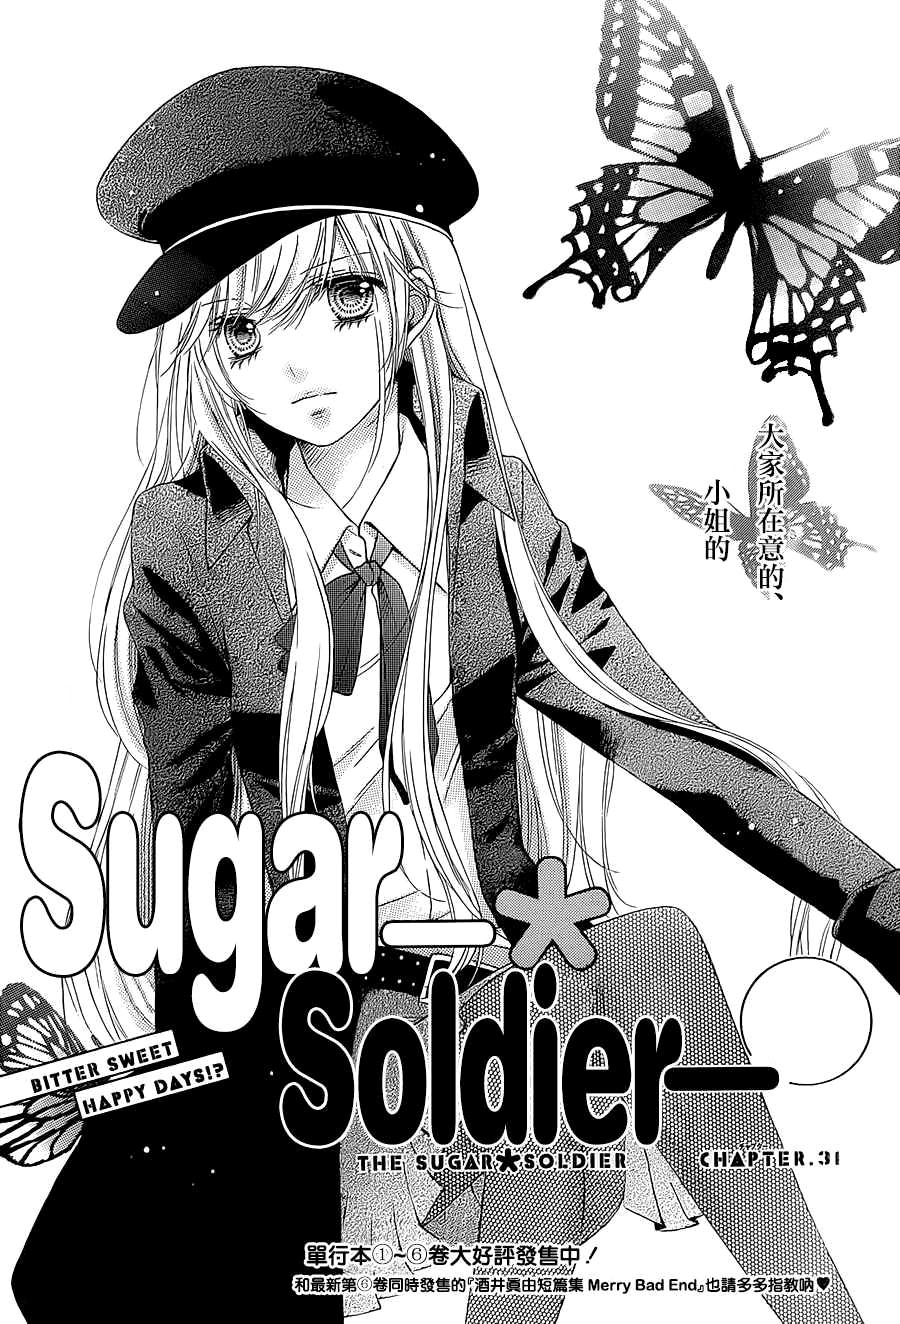 Сахарный солдат 7 - 31